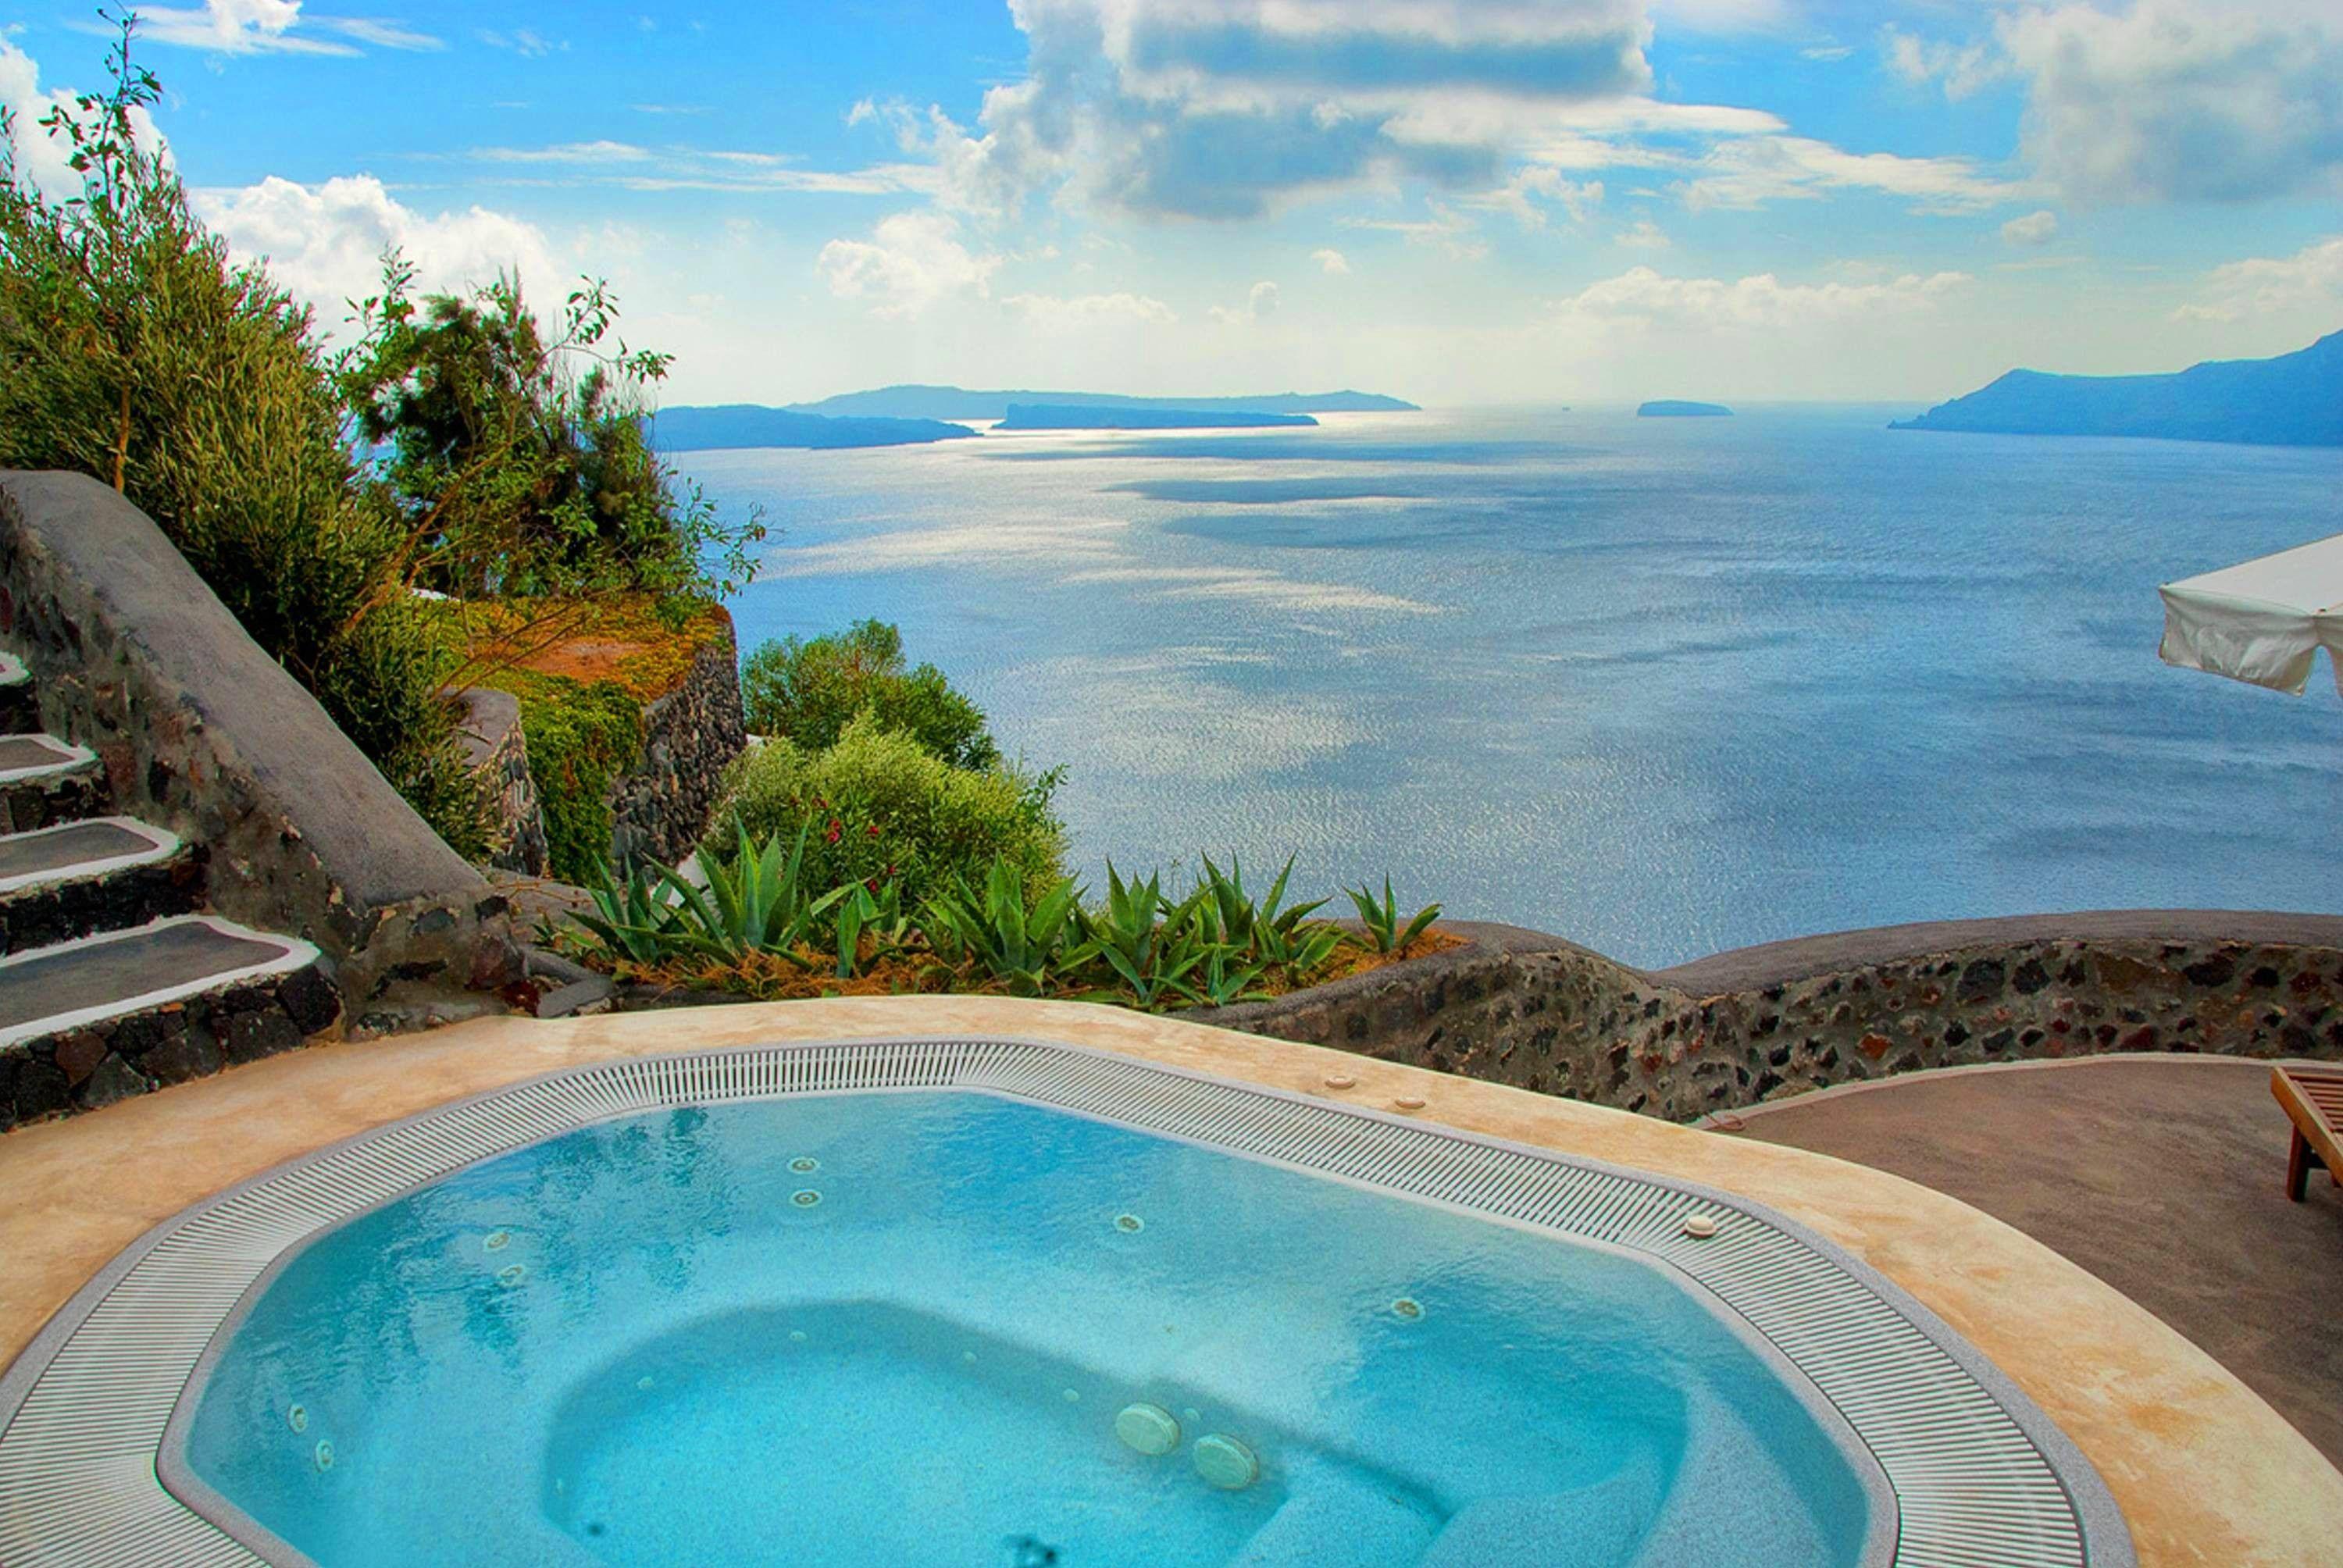 Oceans: Islands Ocean Greece Hot Paradise Vista Santorini Spa Tub